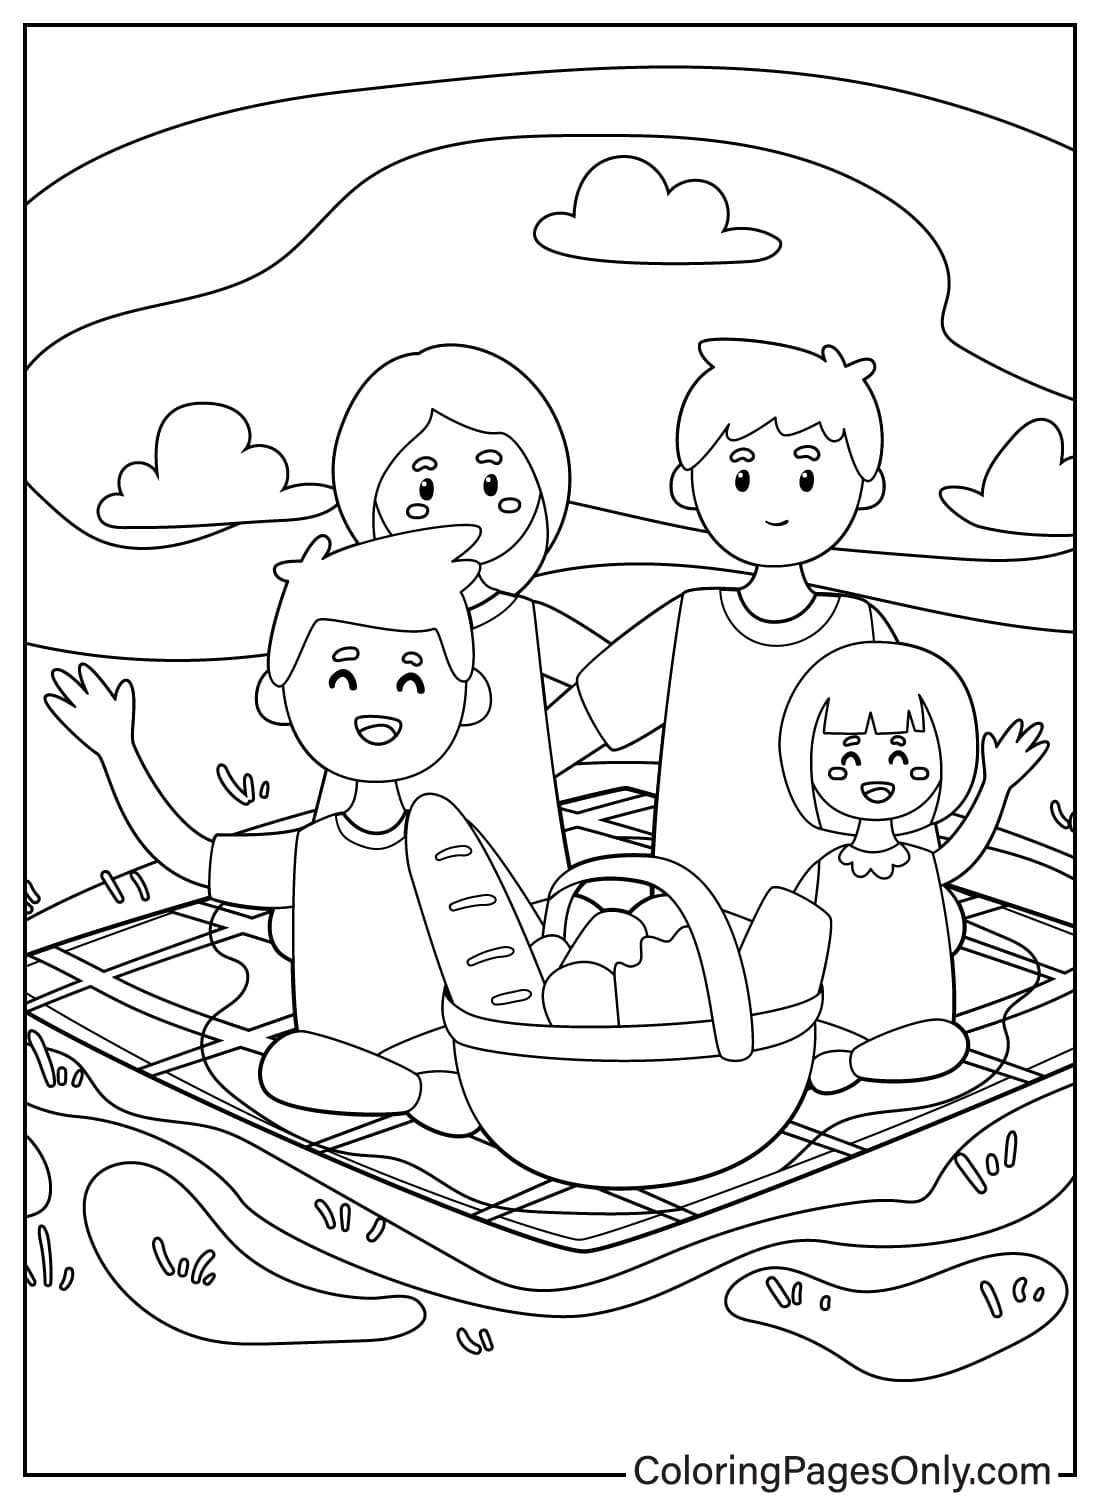 Familienpicknick-Malblatt für Kinder vom Familientag